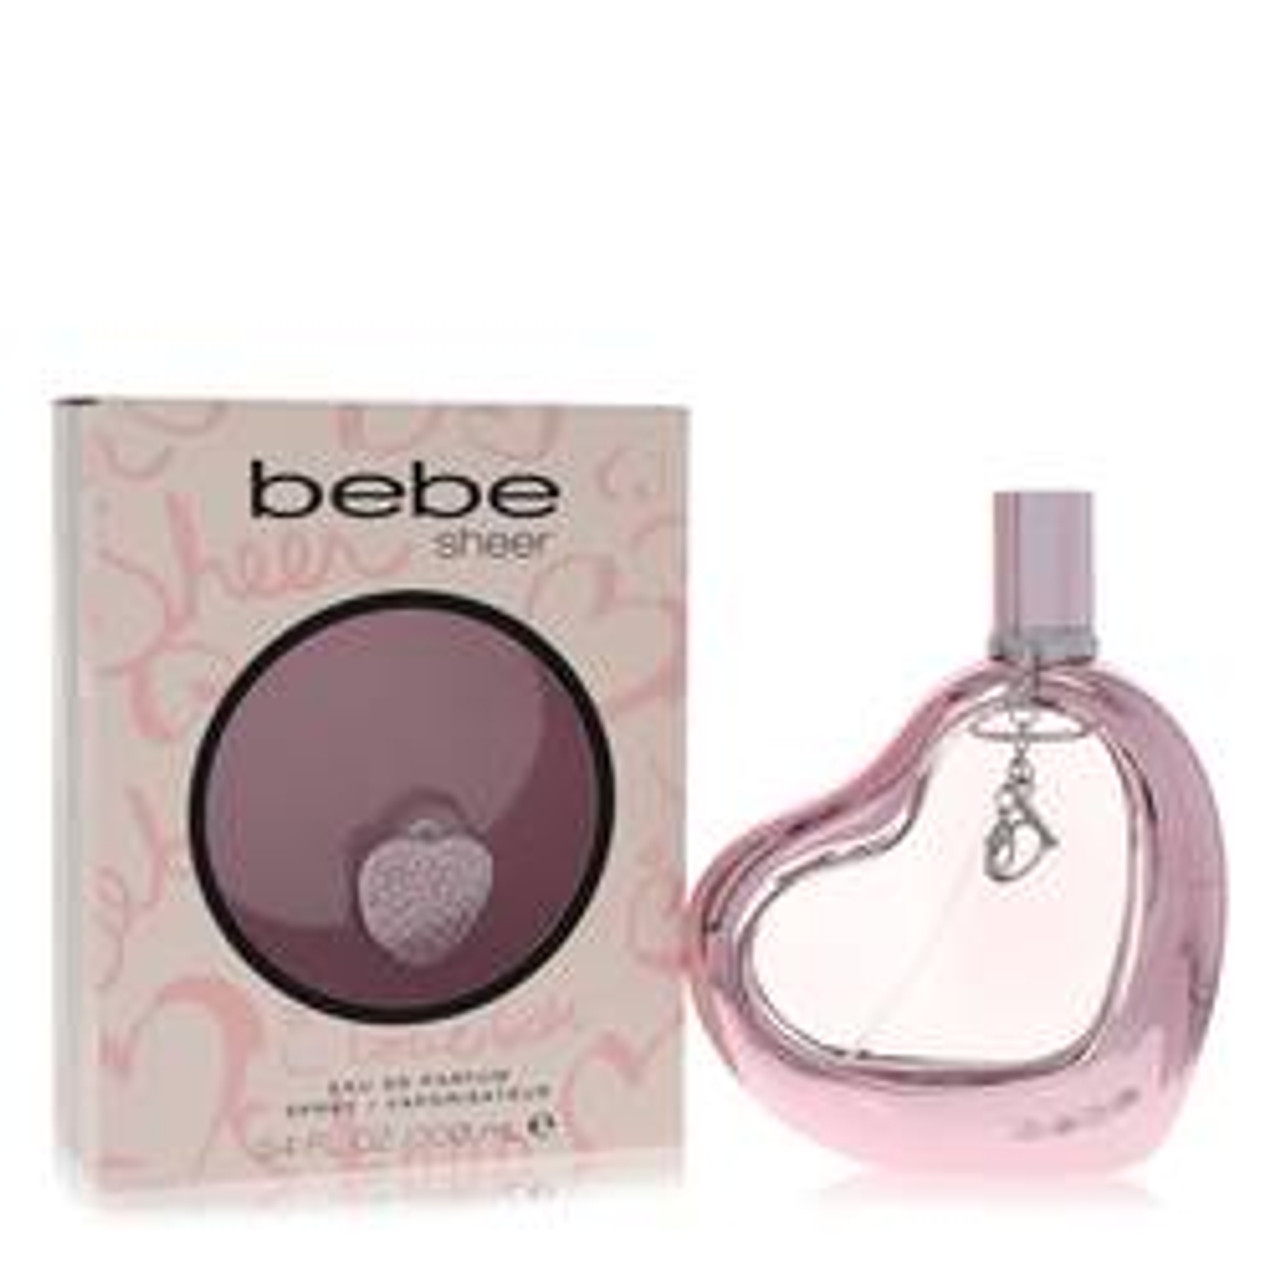 Bebe Sheer Perfume By Bebe Eau De Parfum Spray 3.4 oz for Women - [From 63.00 - Choose pk Qty ] - *Ships from Miami